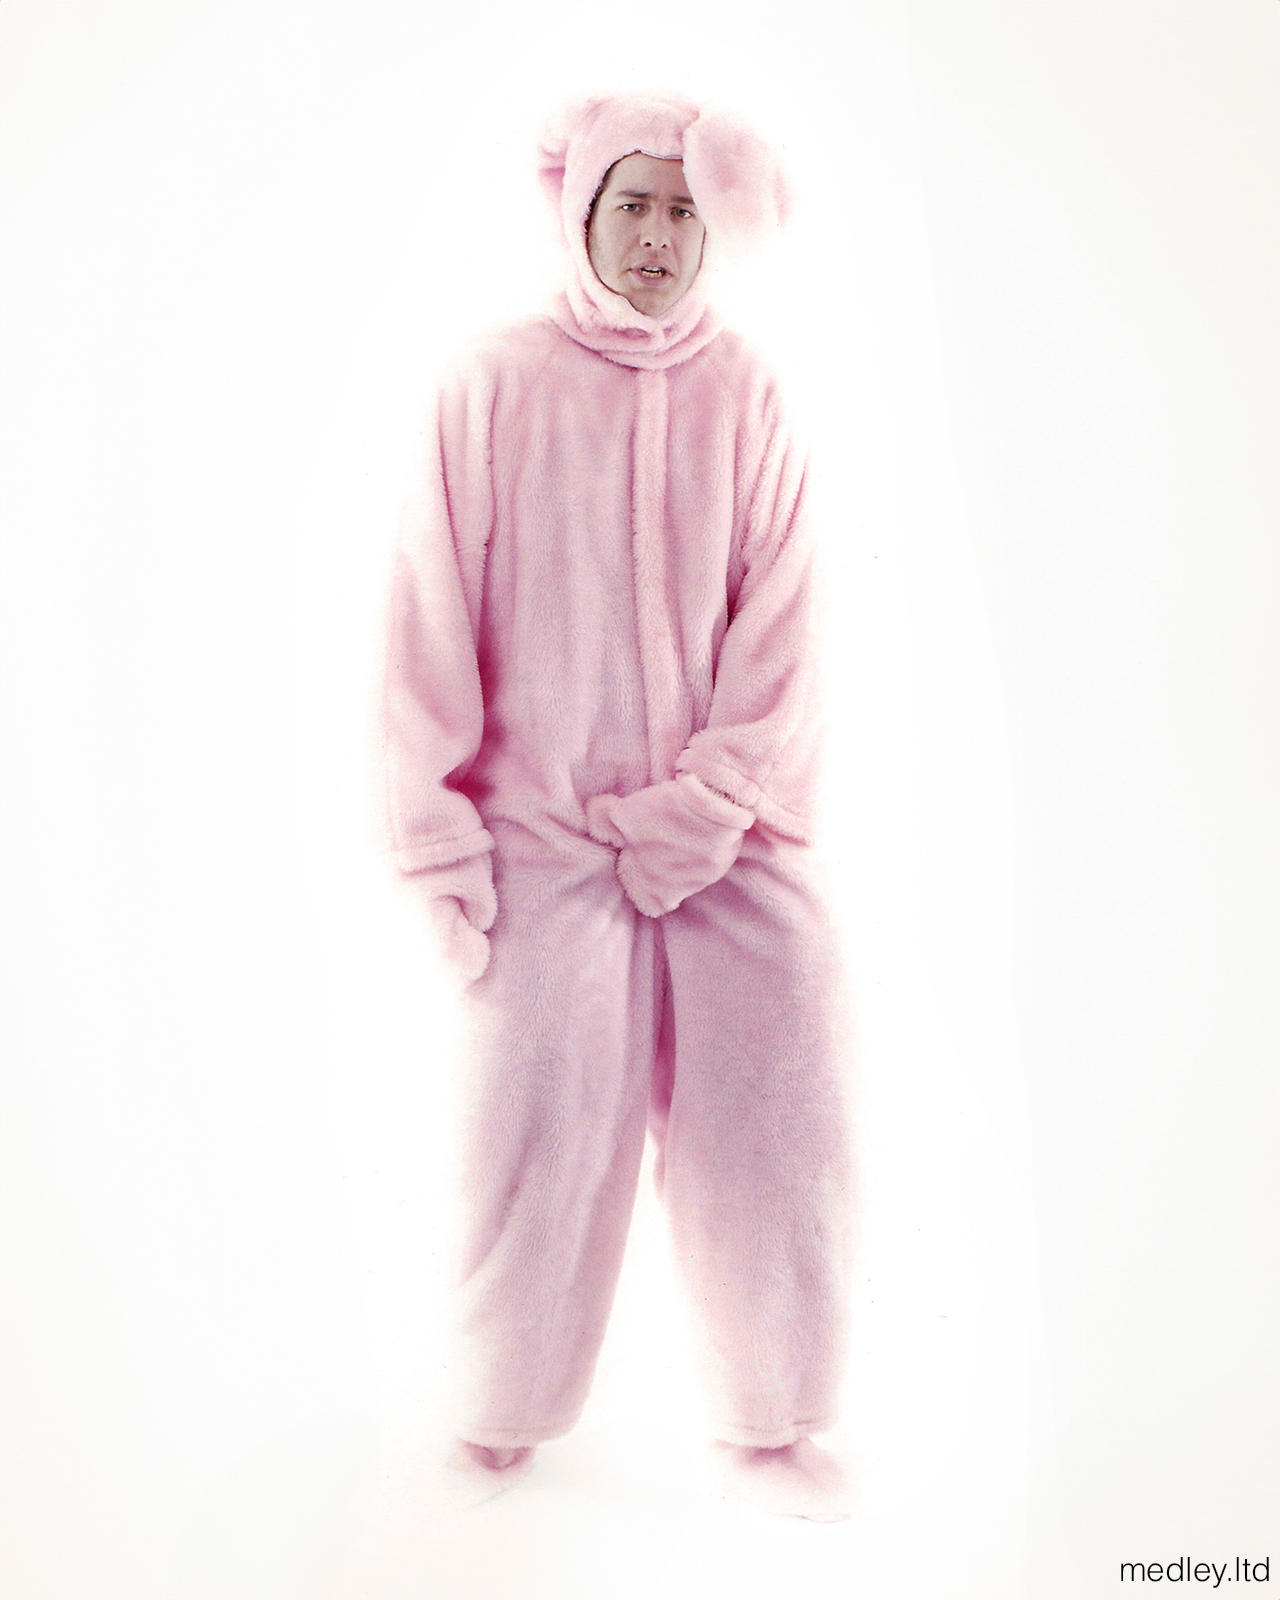 Funny Easter Bunny photograph by artist Matt Medley